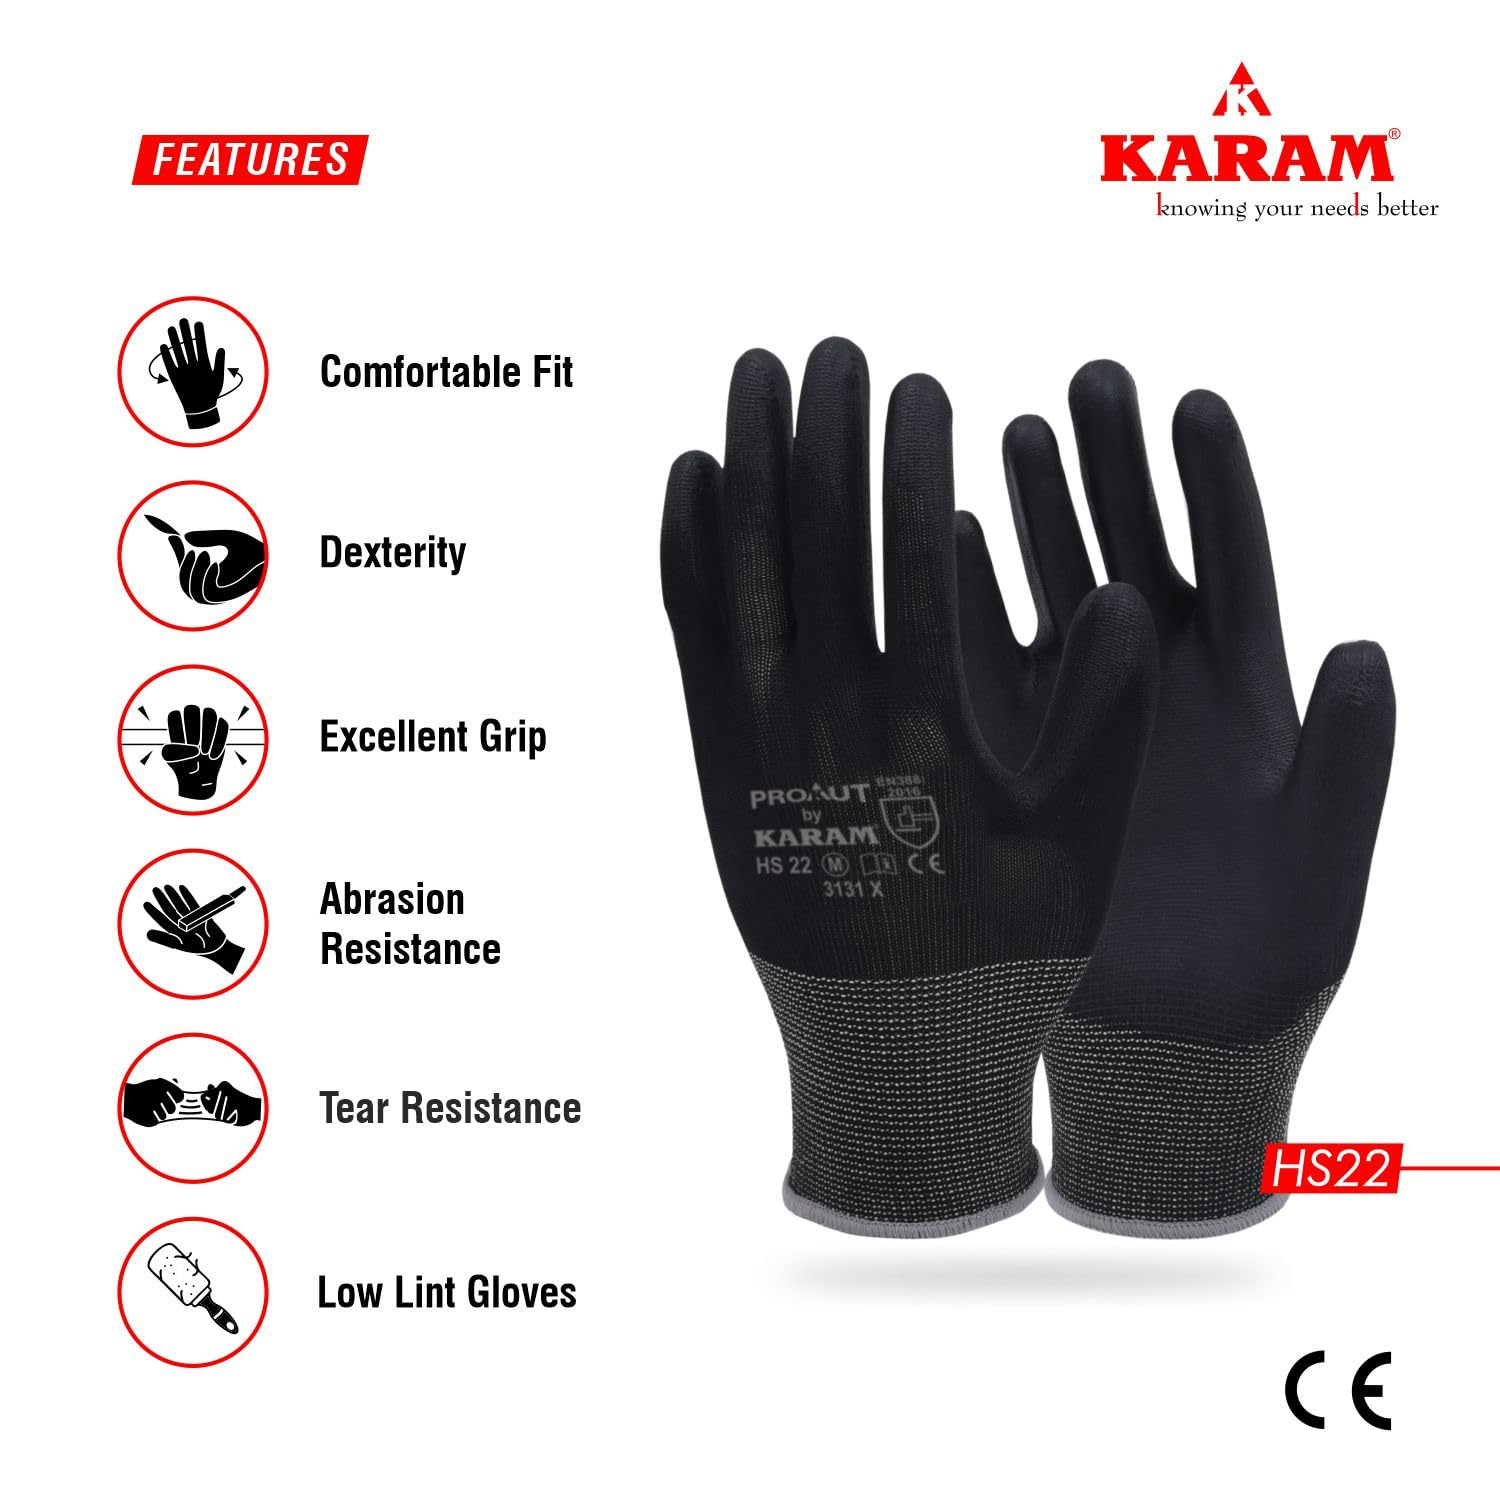 /storage/photos/1/karam new product/Karam Safety gloves HS 22 3.png